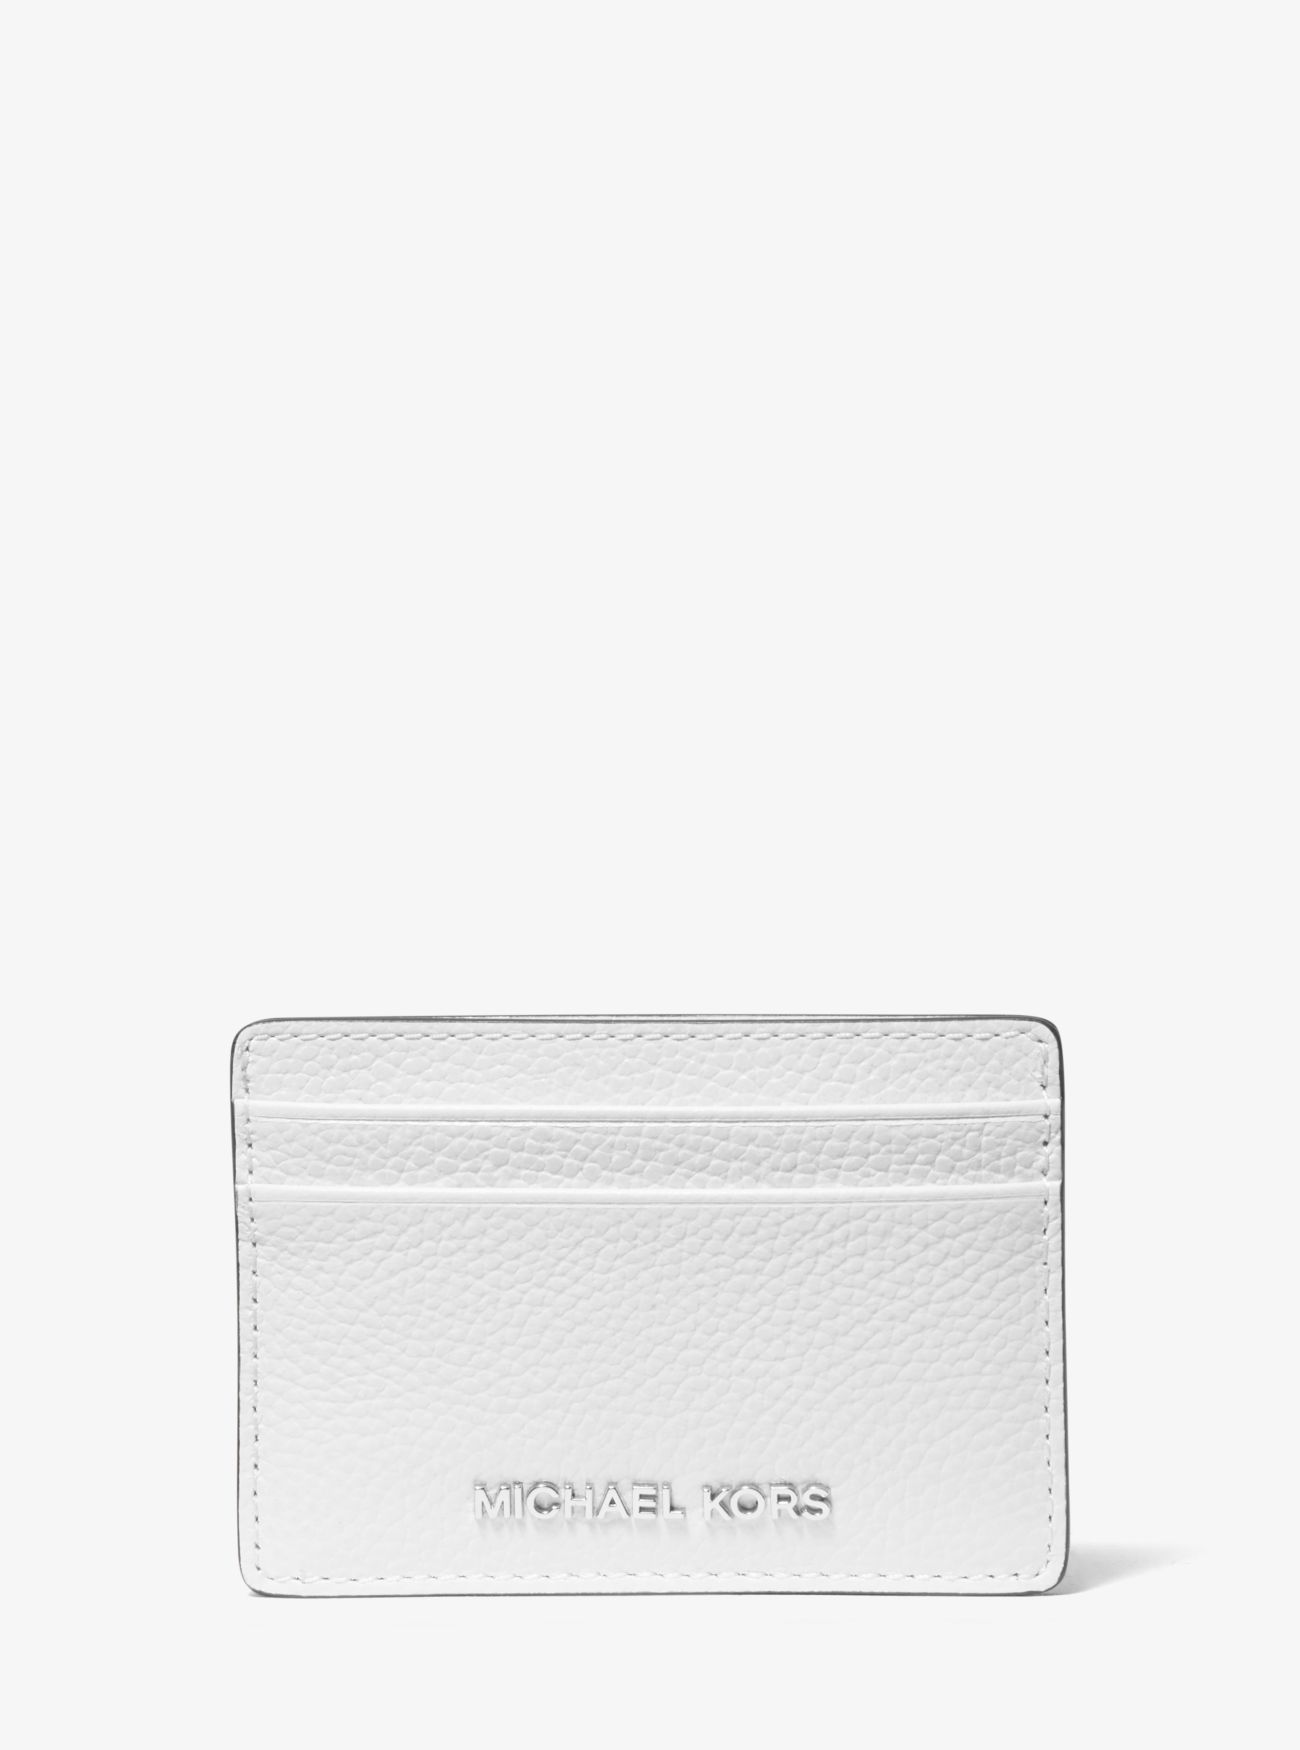 MK Pebbled Leather Card Case - White - Michael Kors